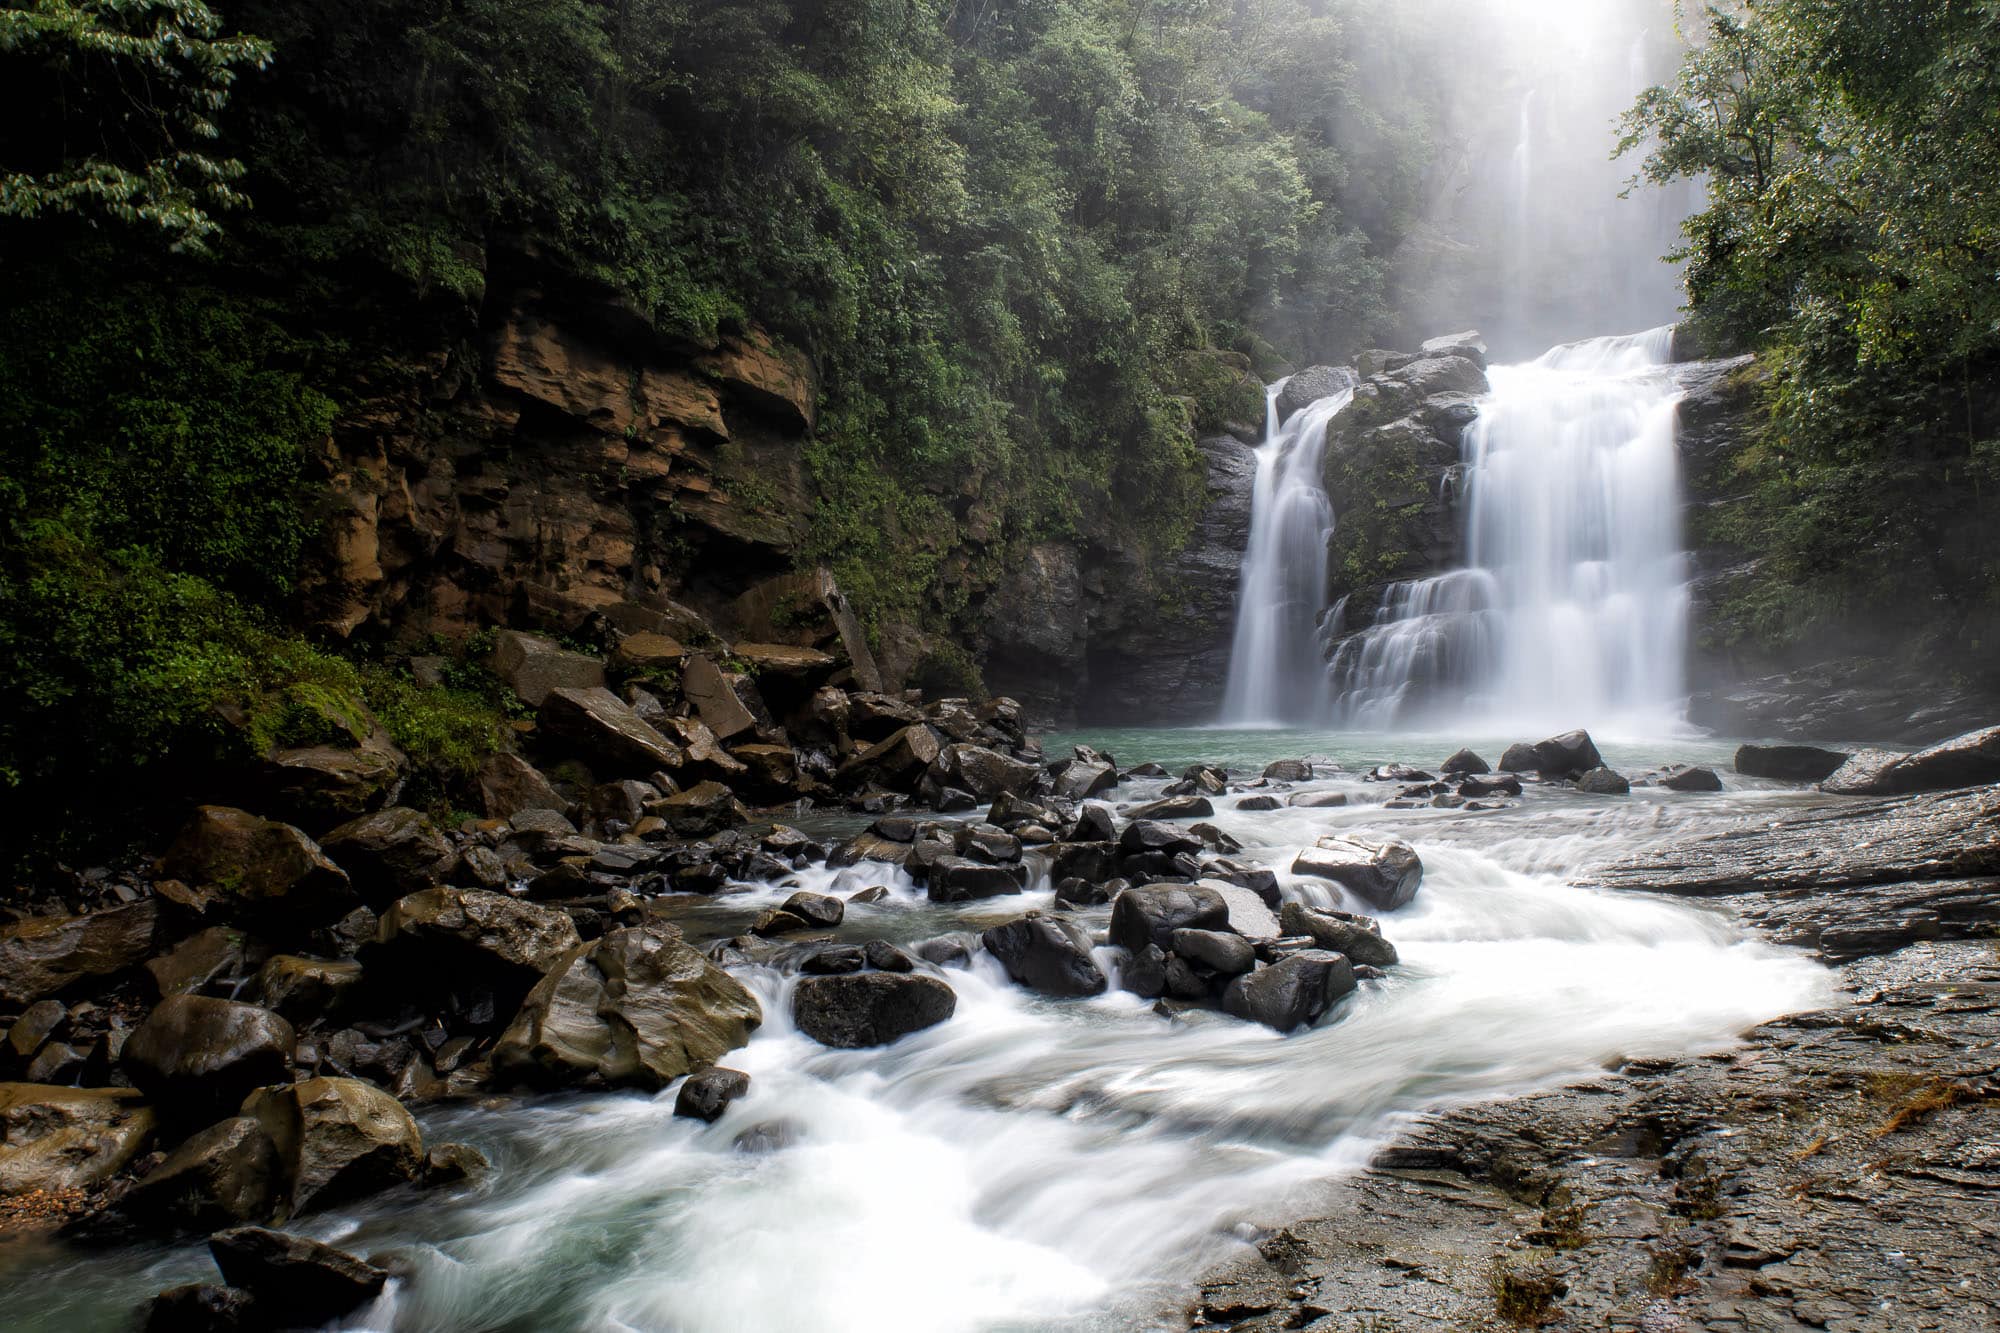 Nauyaca Falls: Photoshoot in a Waterfall